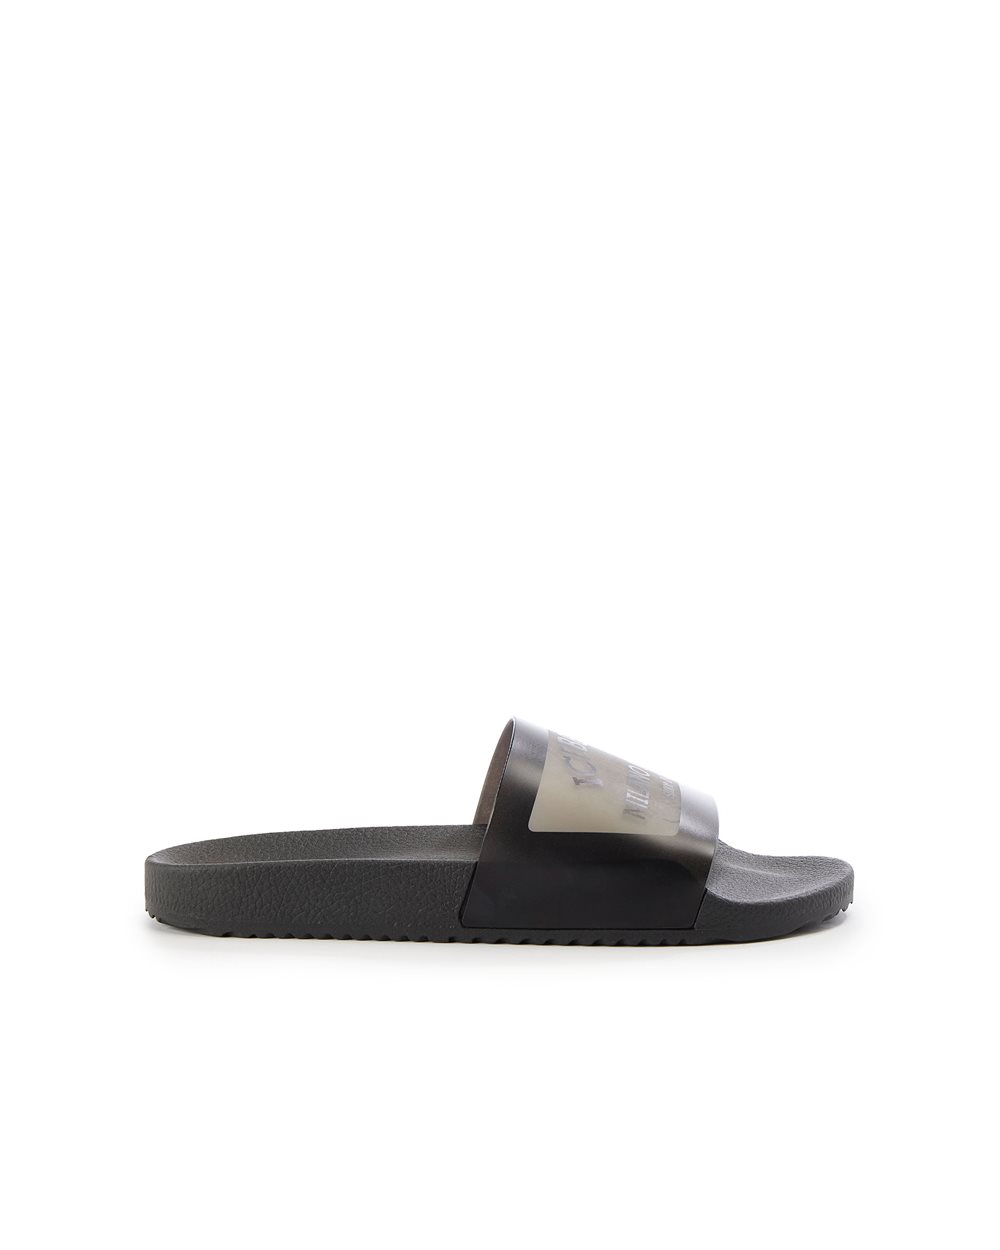 Slider sandal with logo - VALENTINE'S DAY GIFTS | Iceberg - Official Website